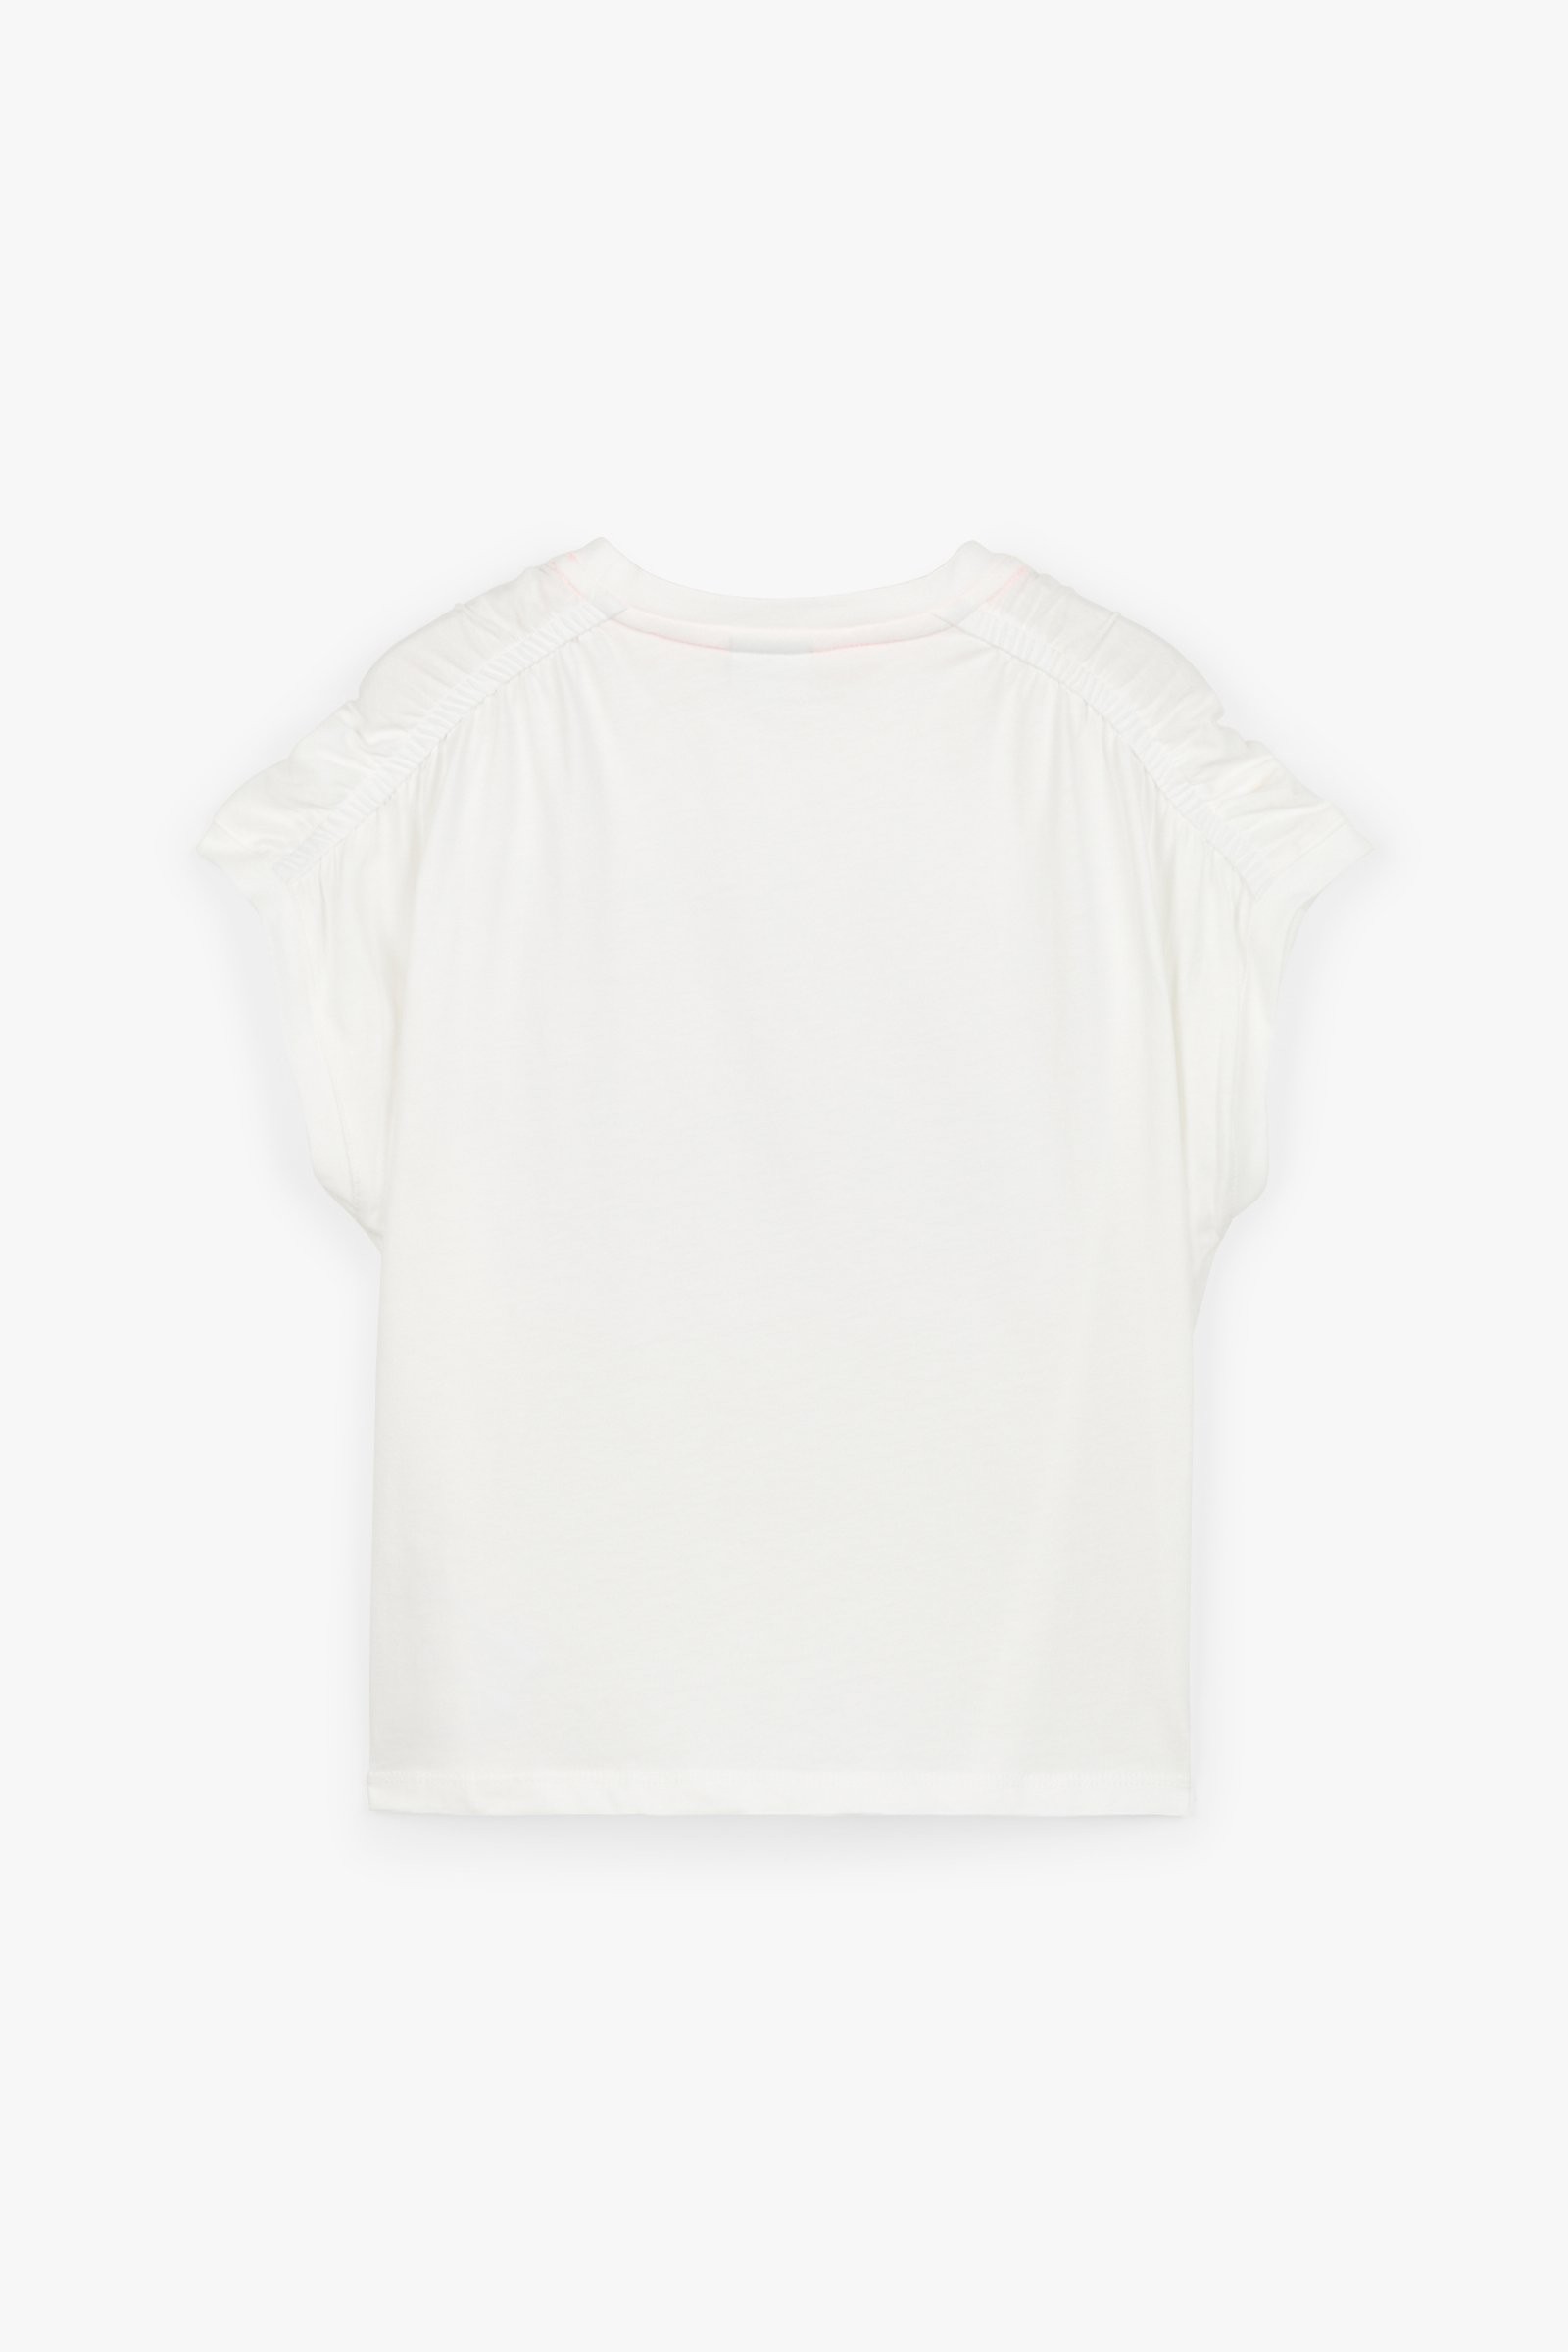 CKS Kids - MILA - t-shirt à manches courtes - blanc